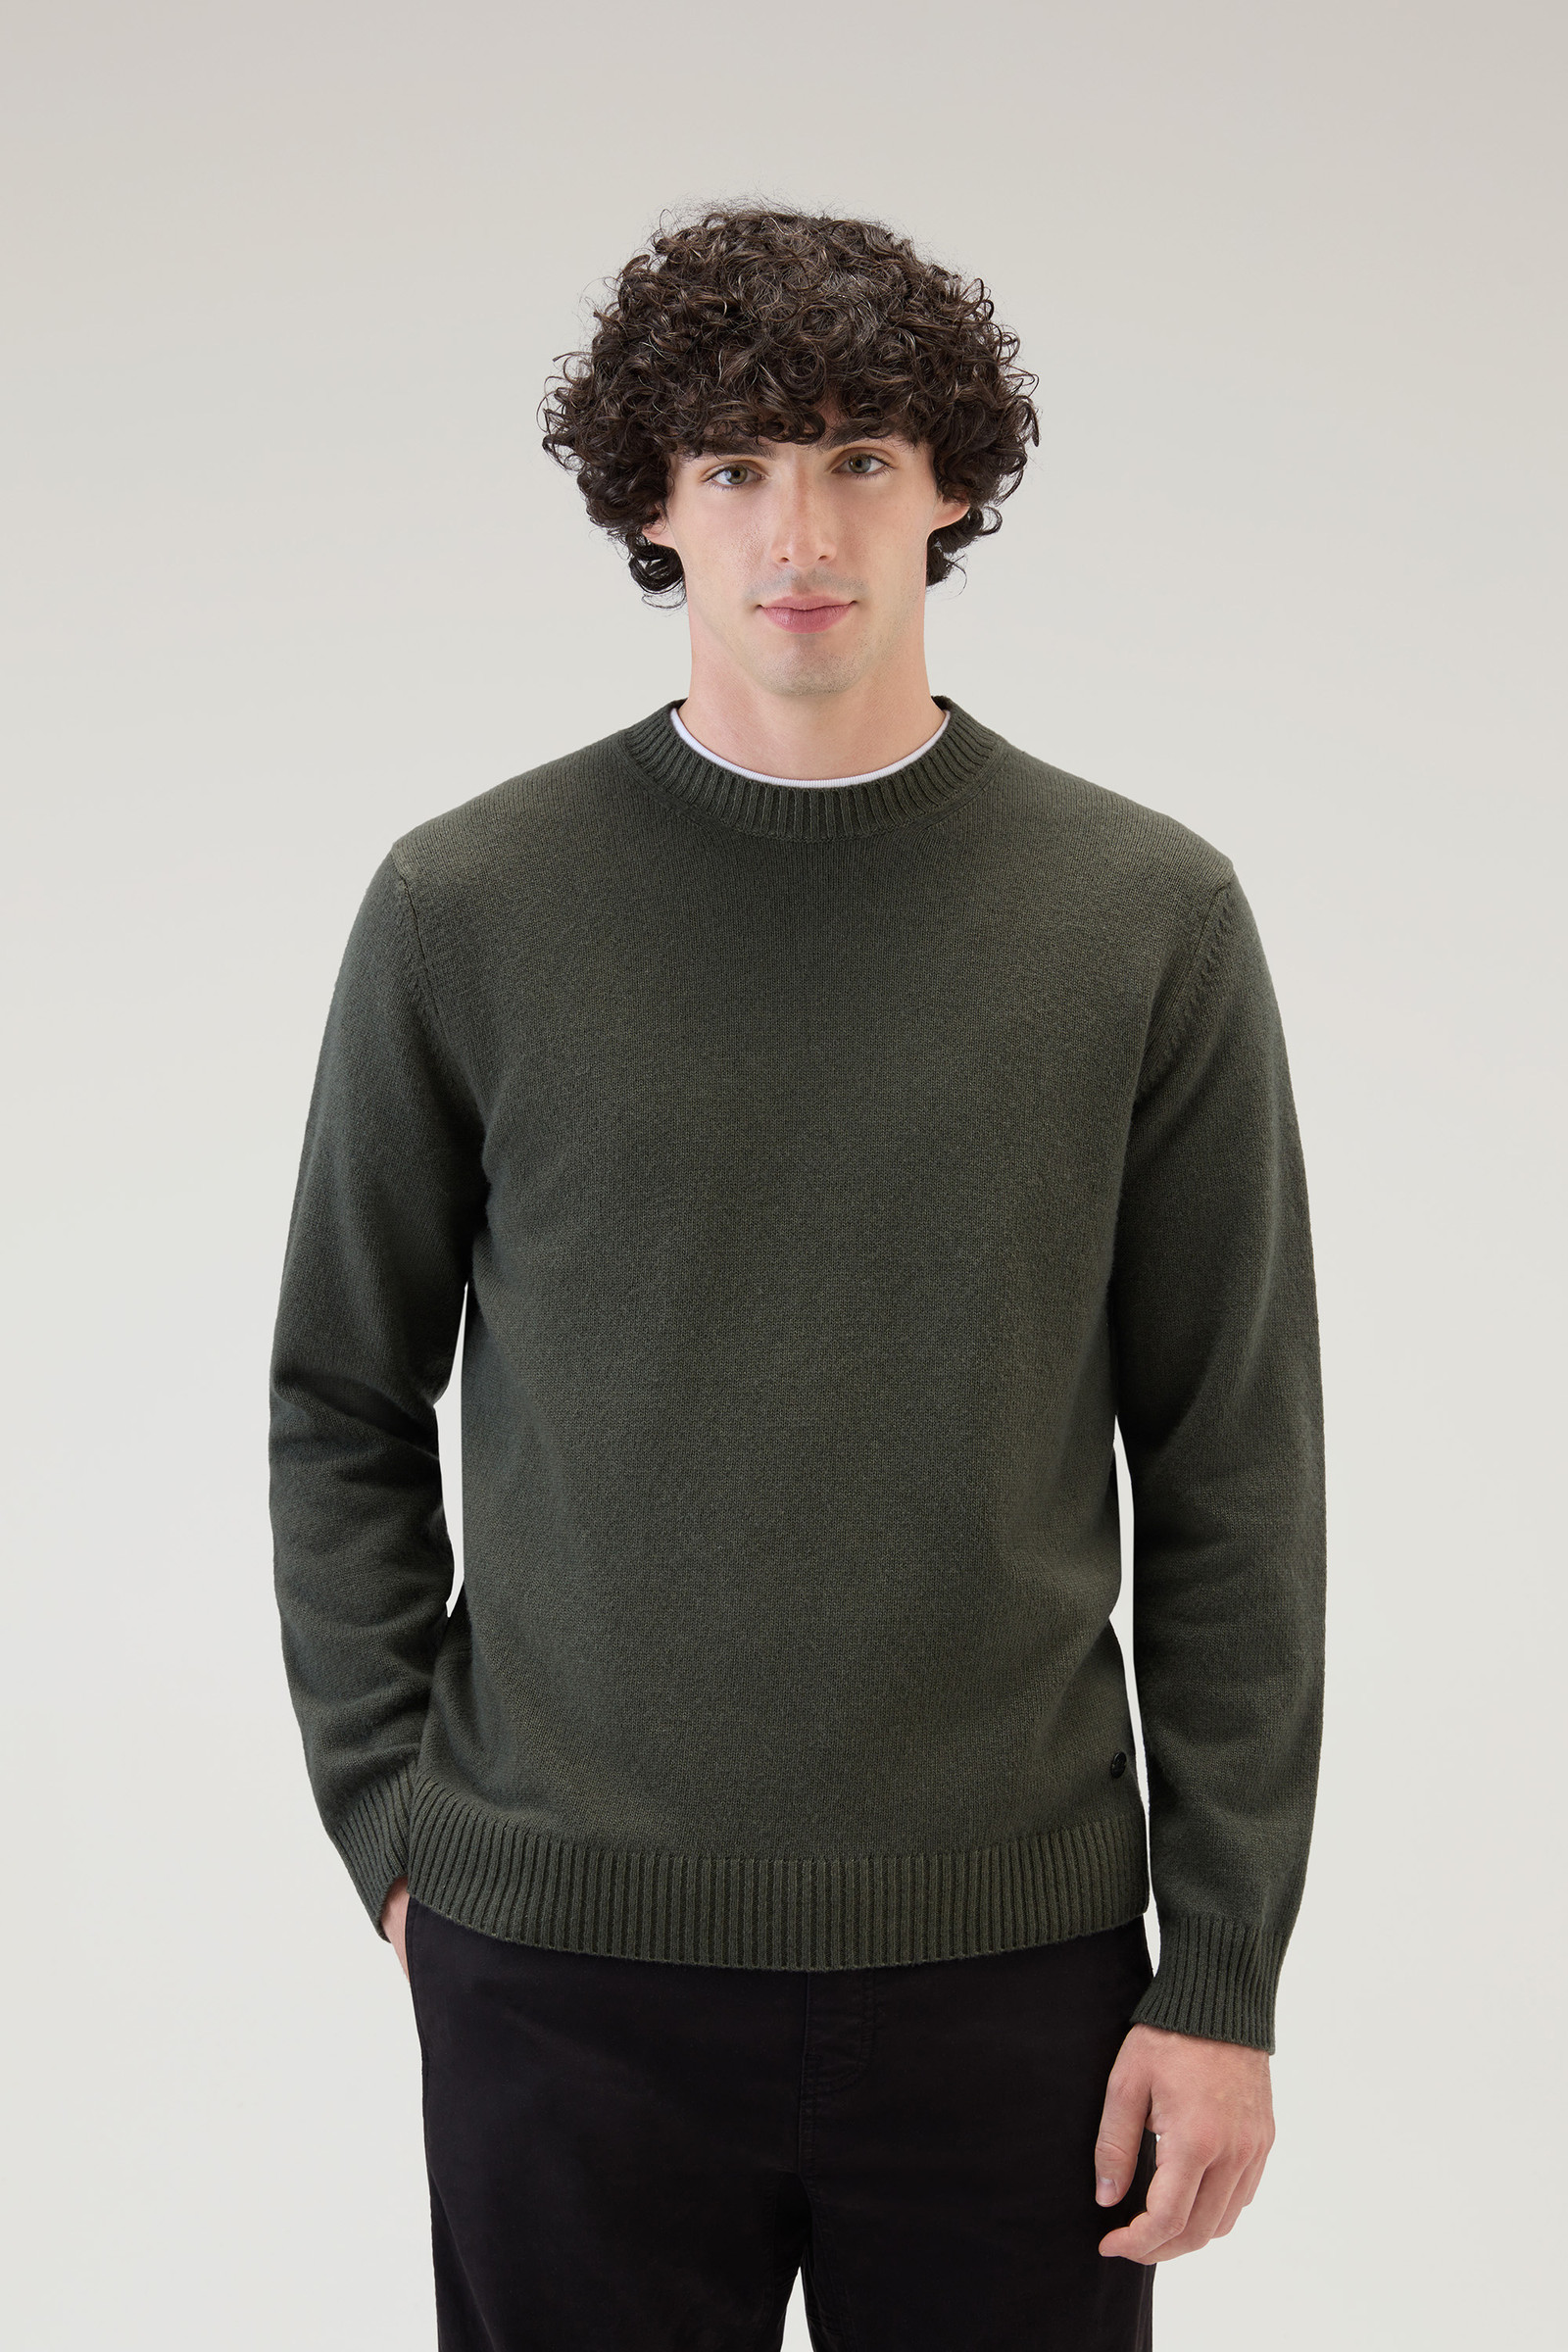 WOOLRICH 1/4 Zip Gray Pullover Sweater Men's Size Medium RN#137013 EUC!